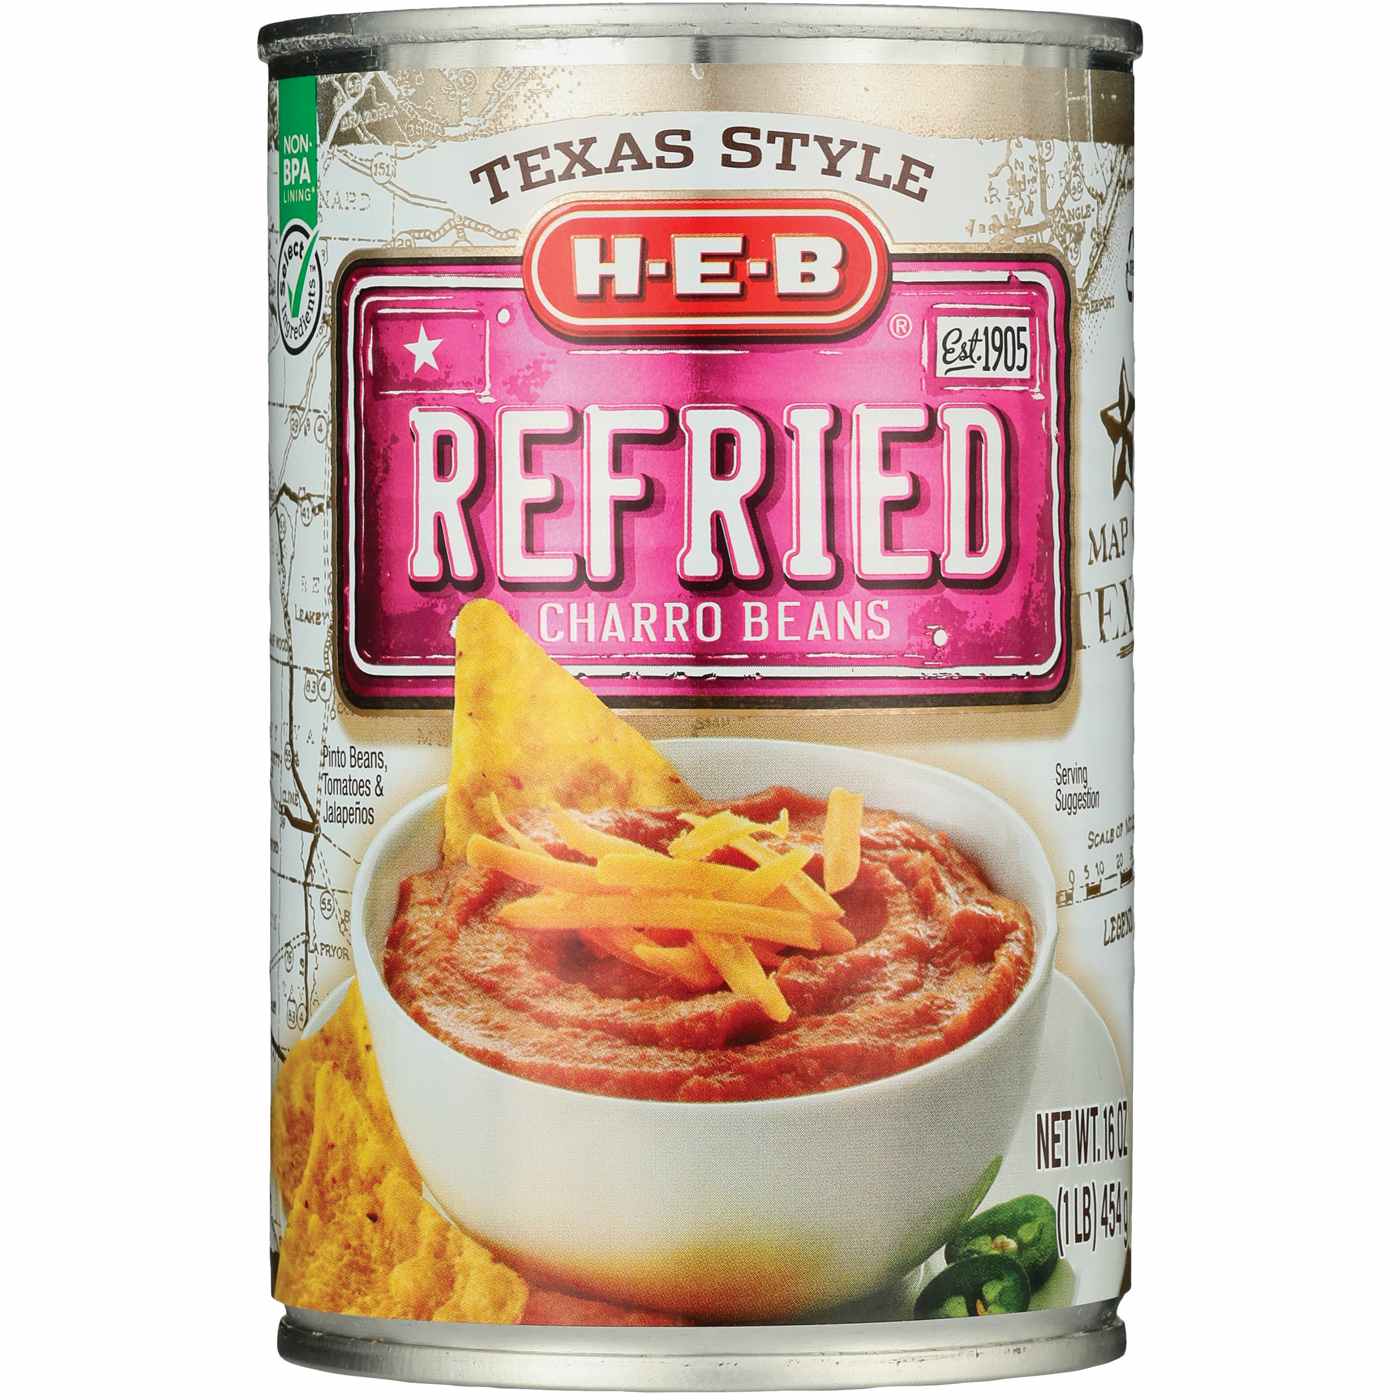 H-E-B Texas Style Refried Charro Beans; image 1 of 2